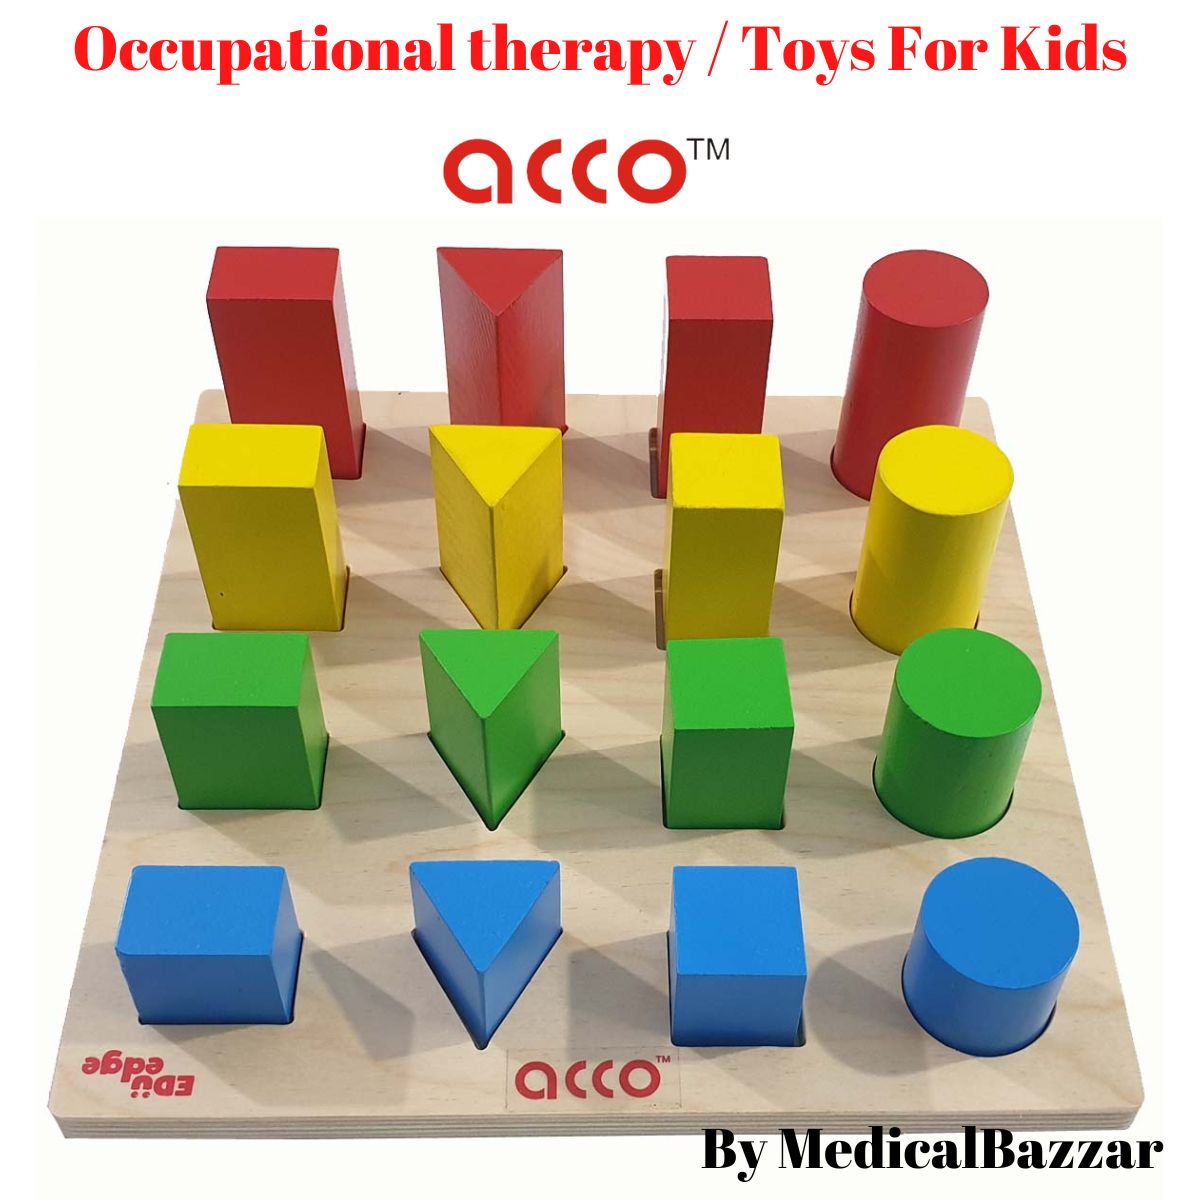 acco Multi Shape Peg Board Toys for Kids (20 Pegs)